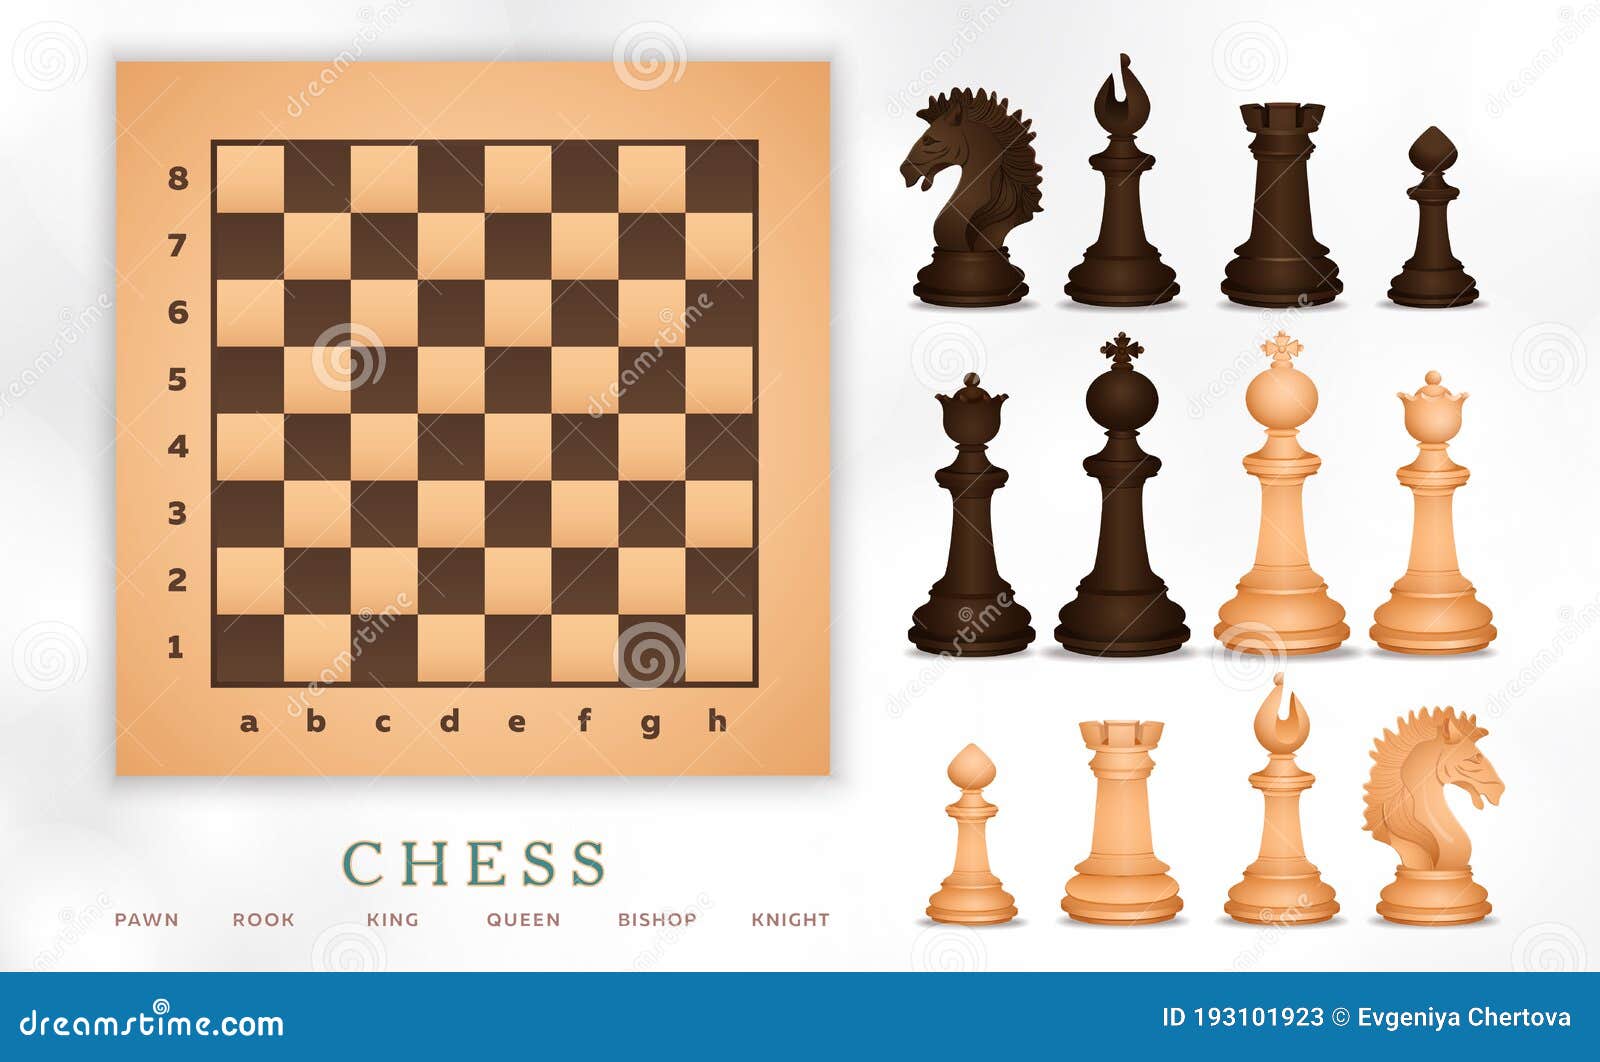 Chess Figures names